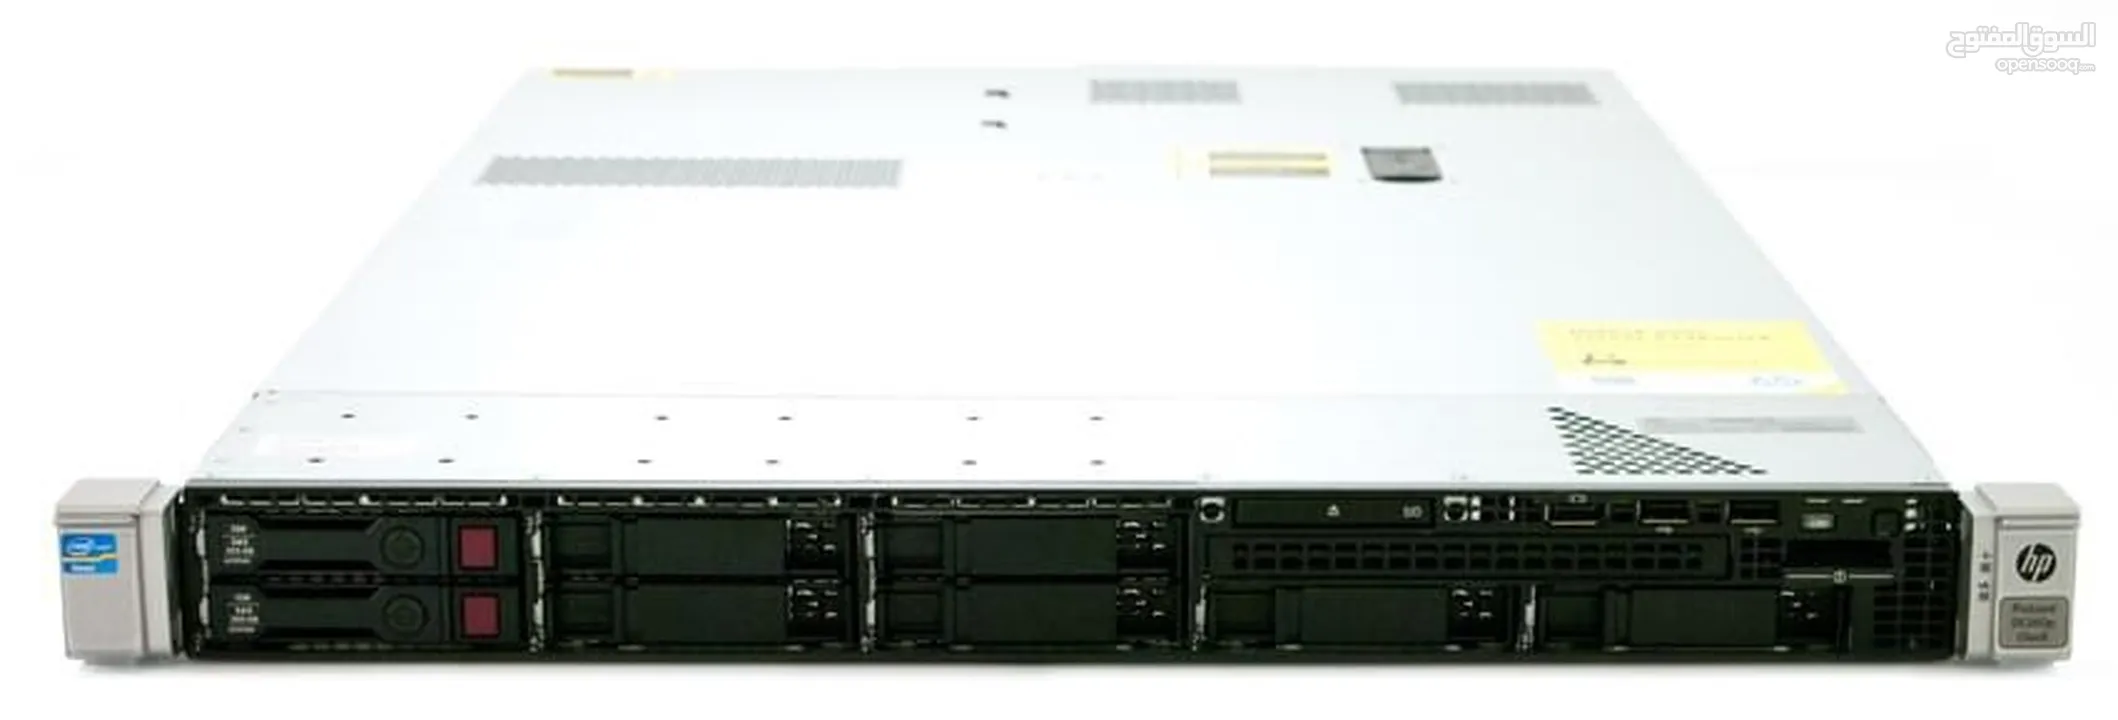 سيرفر HP ProLiant DL360 G8 Server 1U - 2x8Core CPU - 64GB RAM - 4x146GB